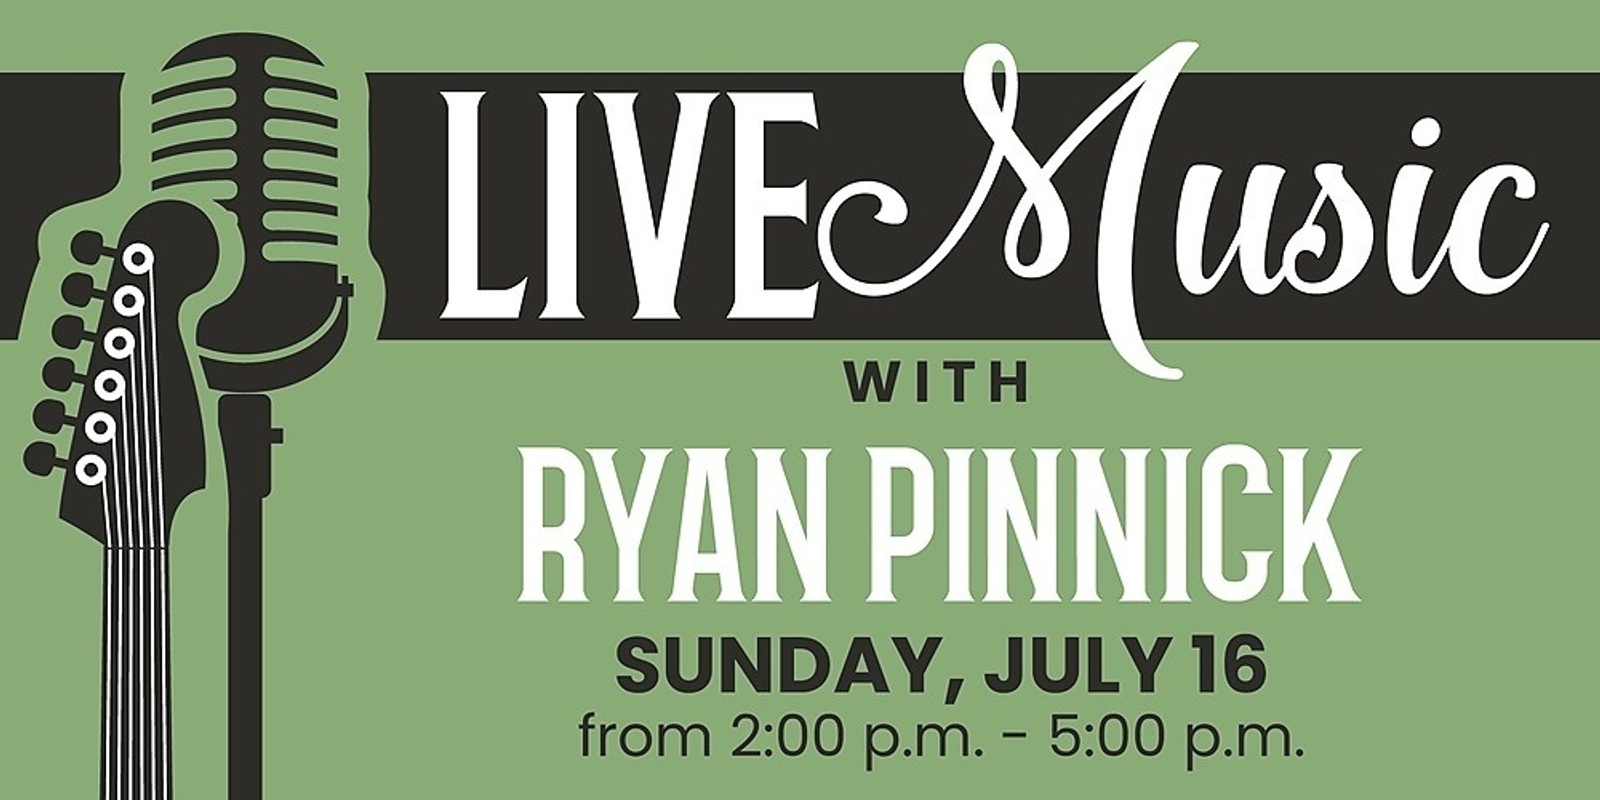 Ryan Pinnick Live at WSCW July 16